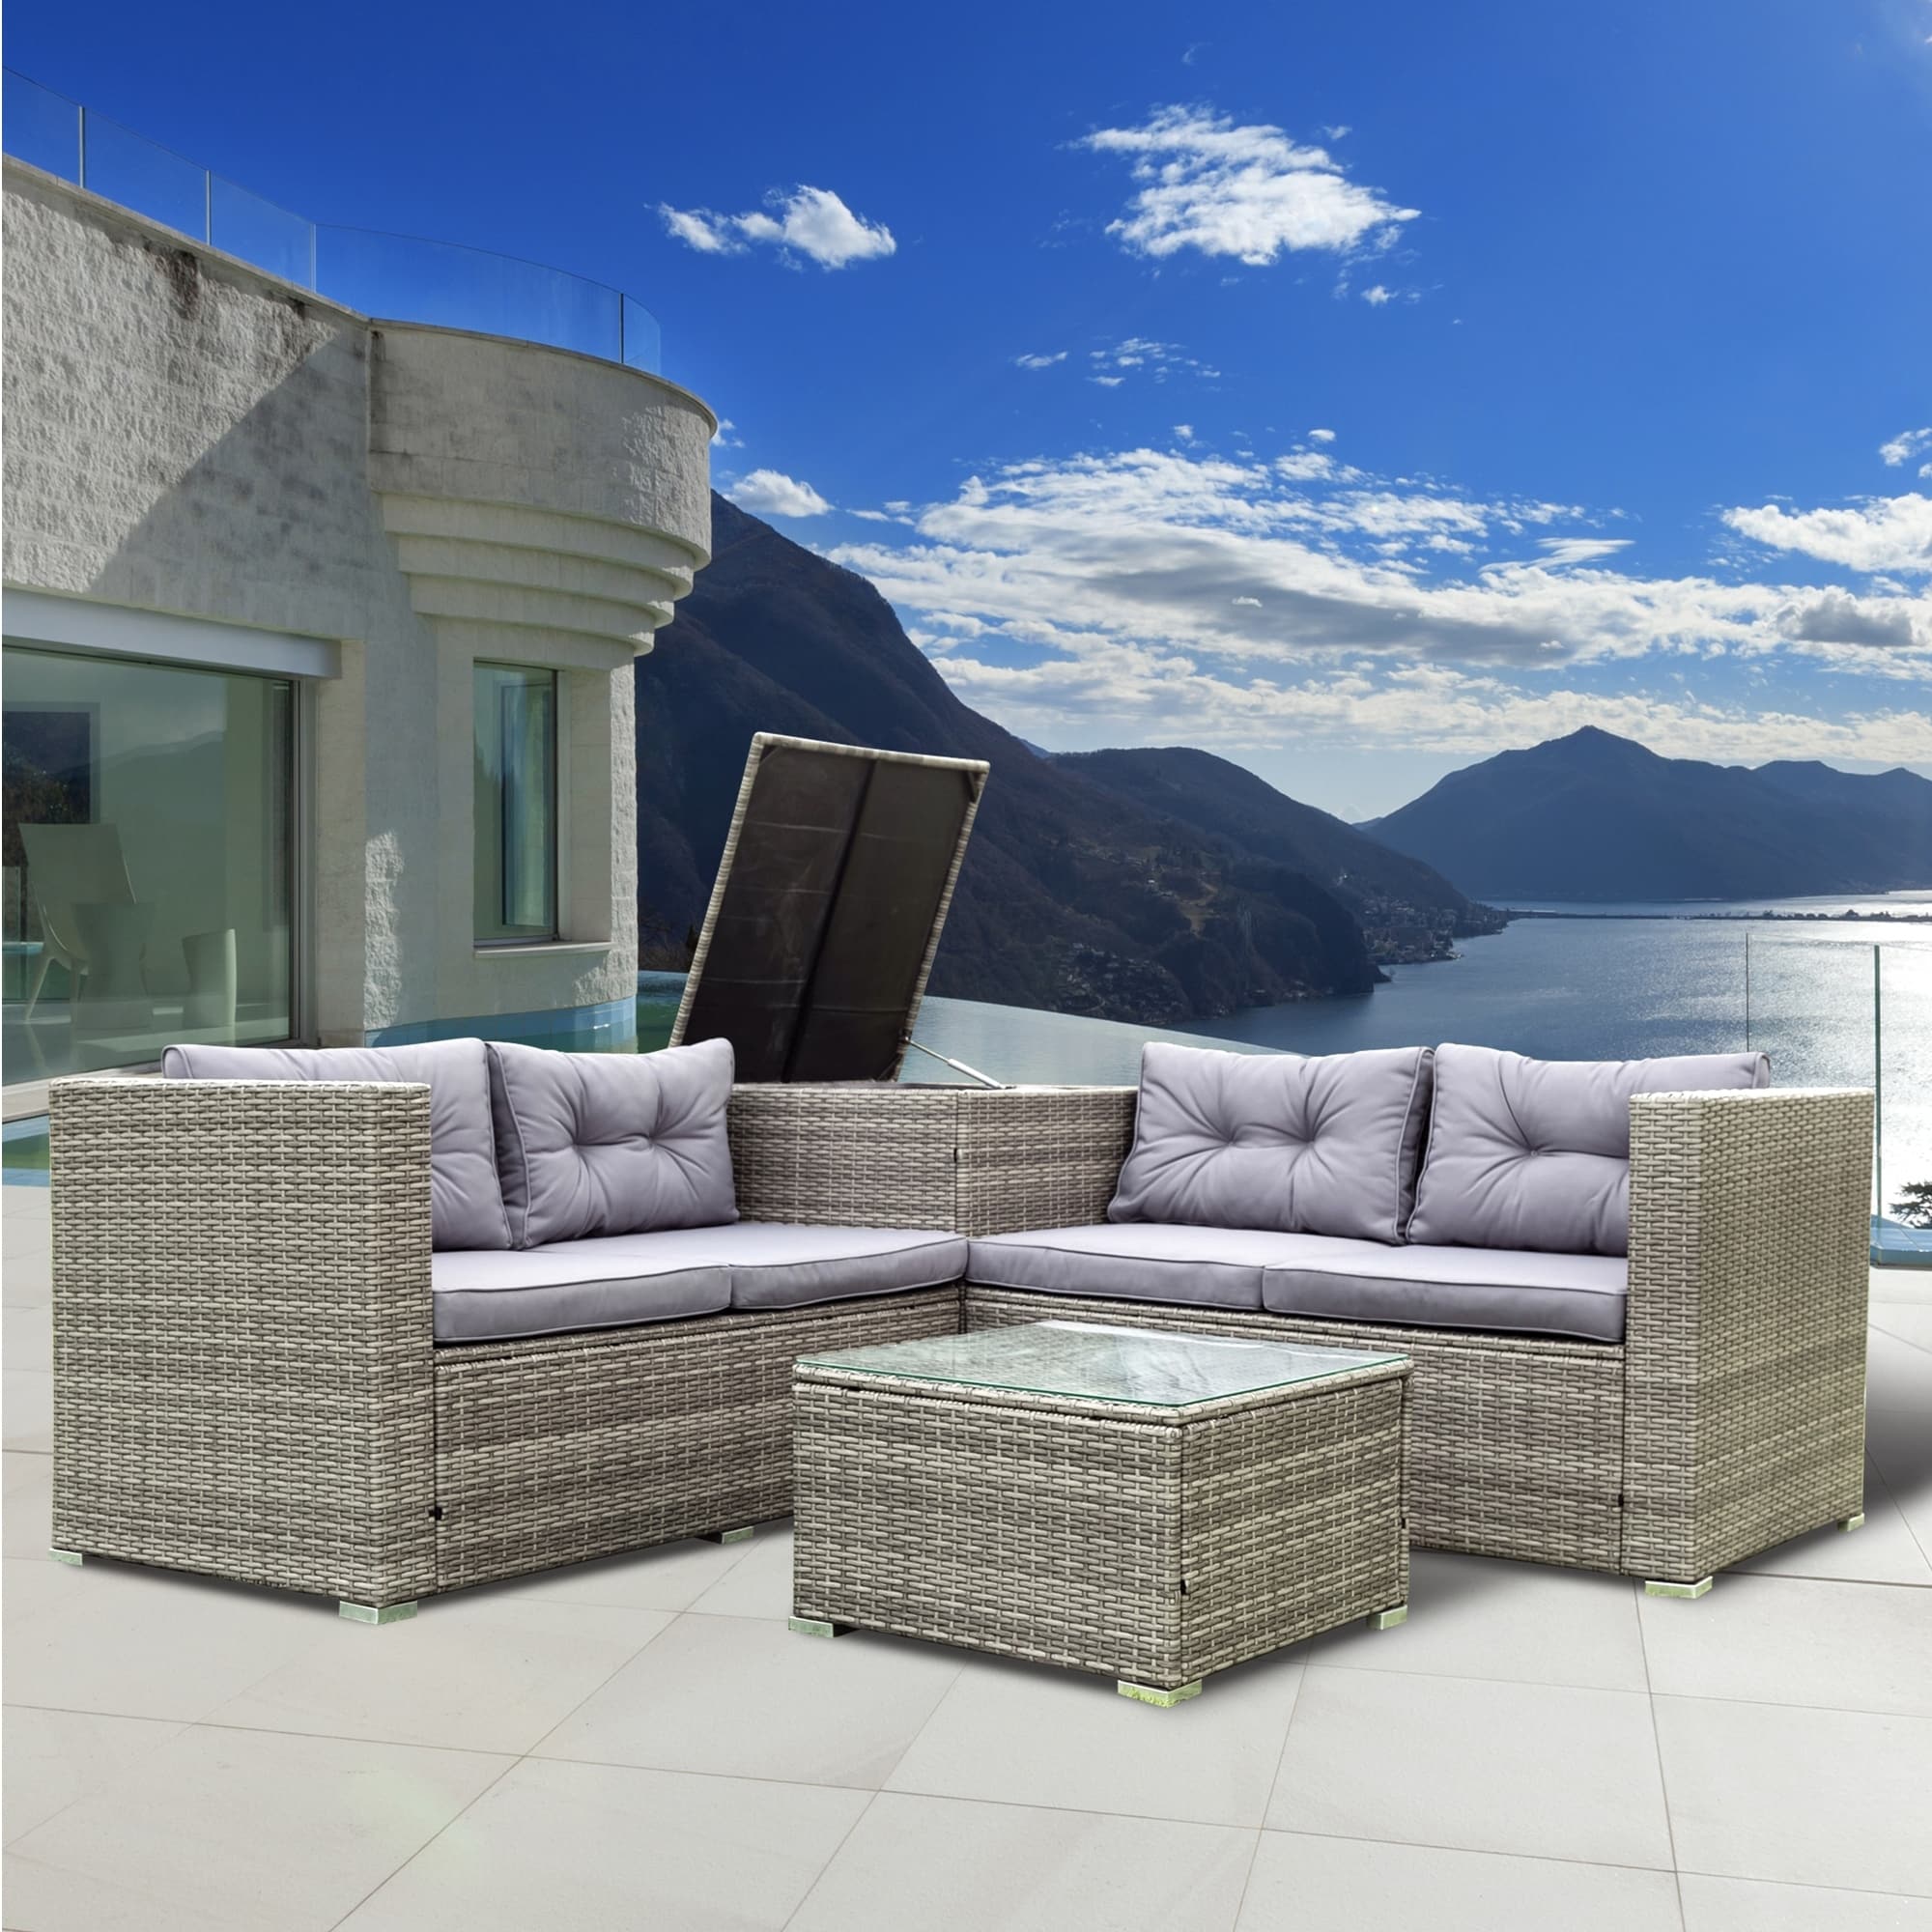 4 Piece Patio Sectional Wicker Rattan Outdoor Furniture Sofa Set